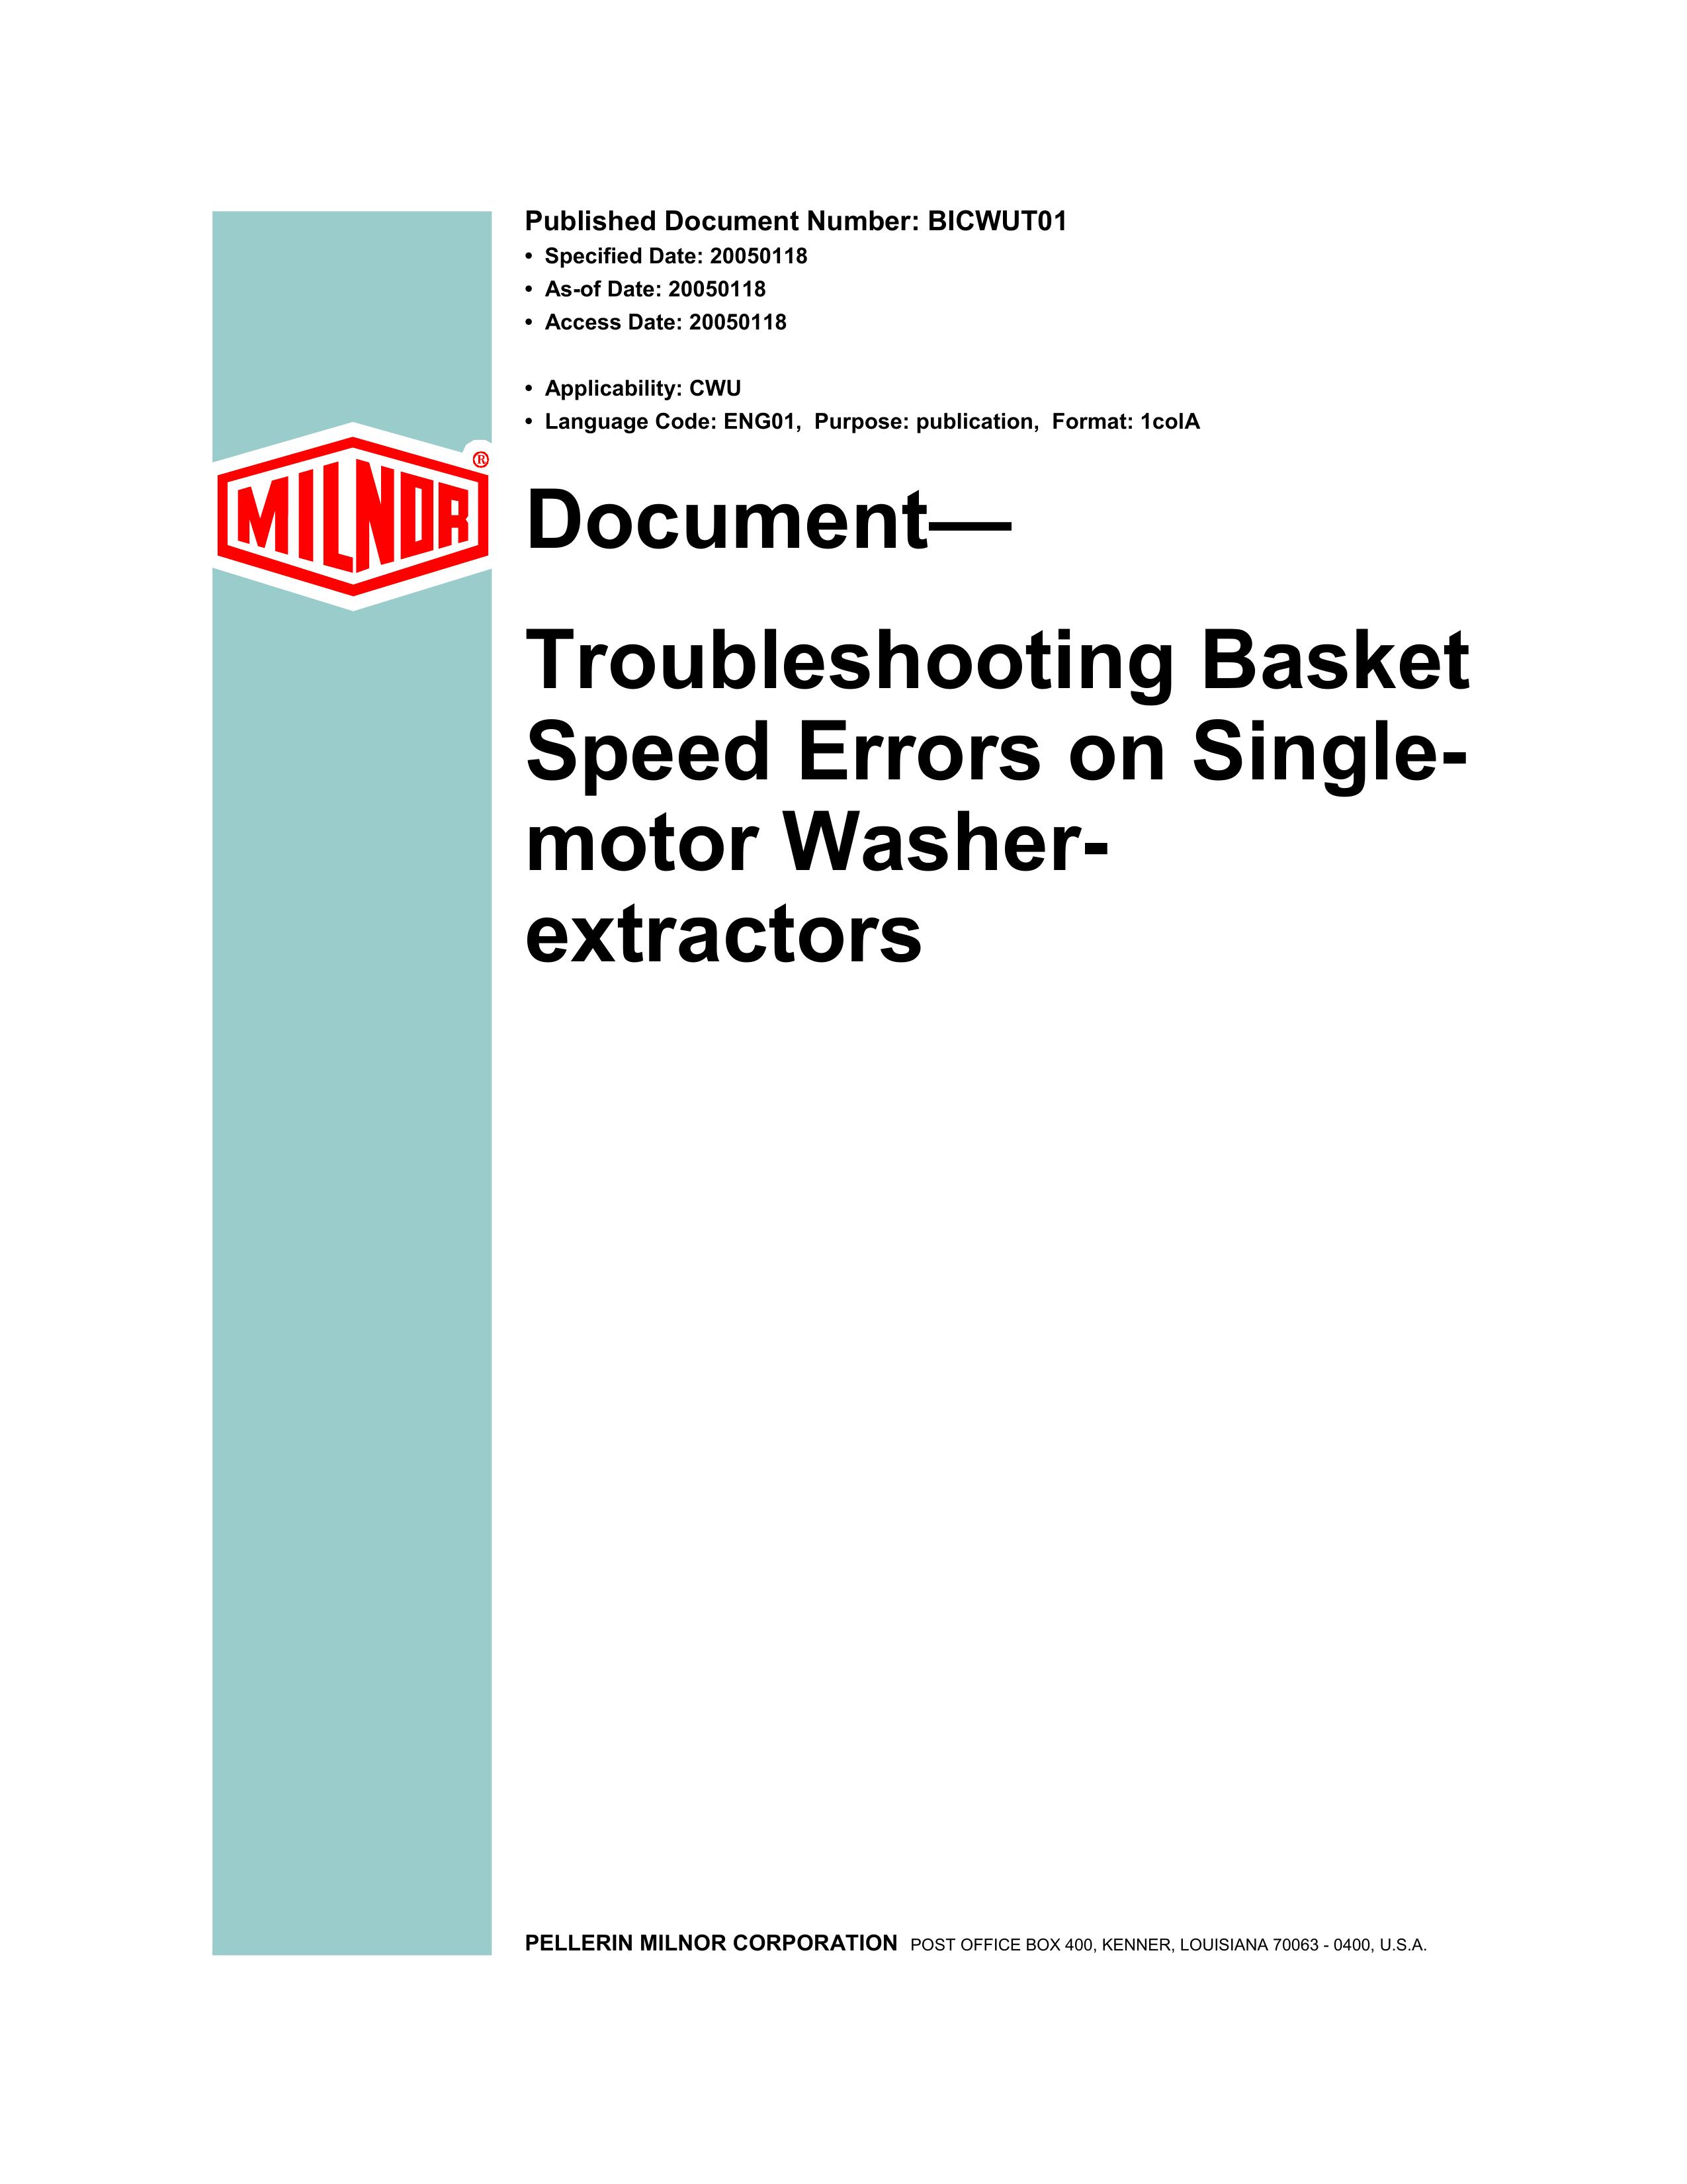 Milnor BICWUT01 Washer User Manual